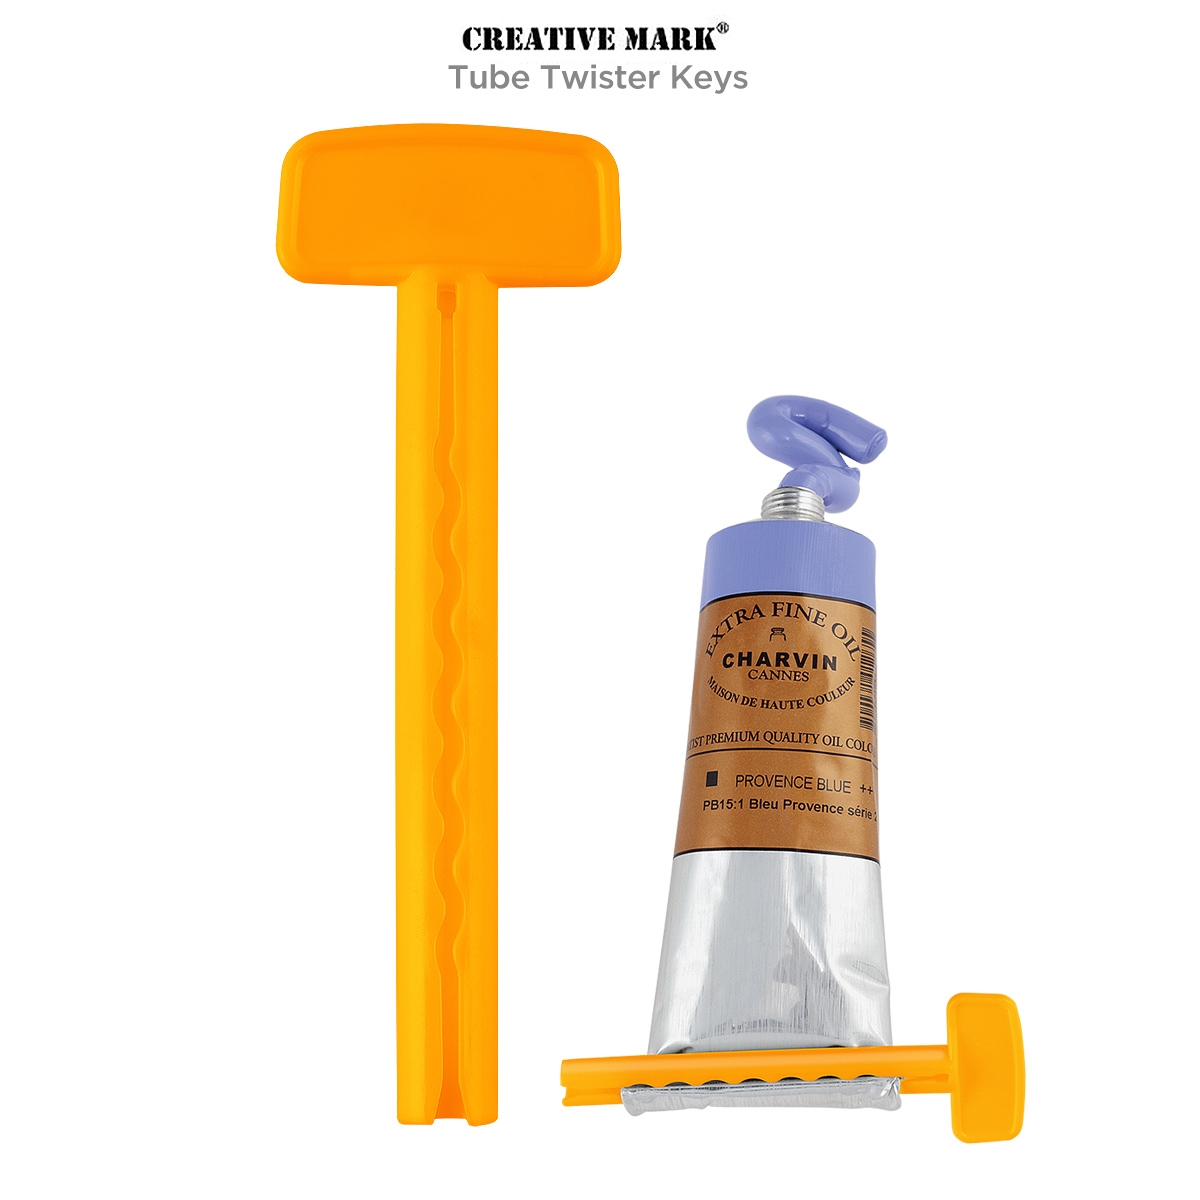 Creative Mark Universal Tube Twister Keys